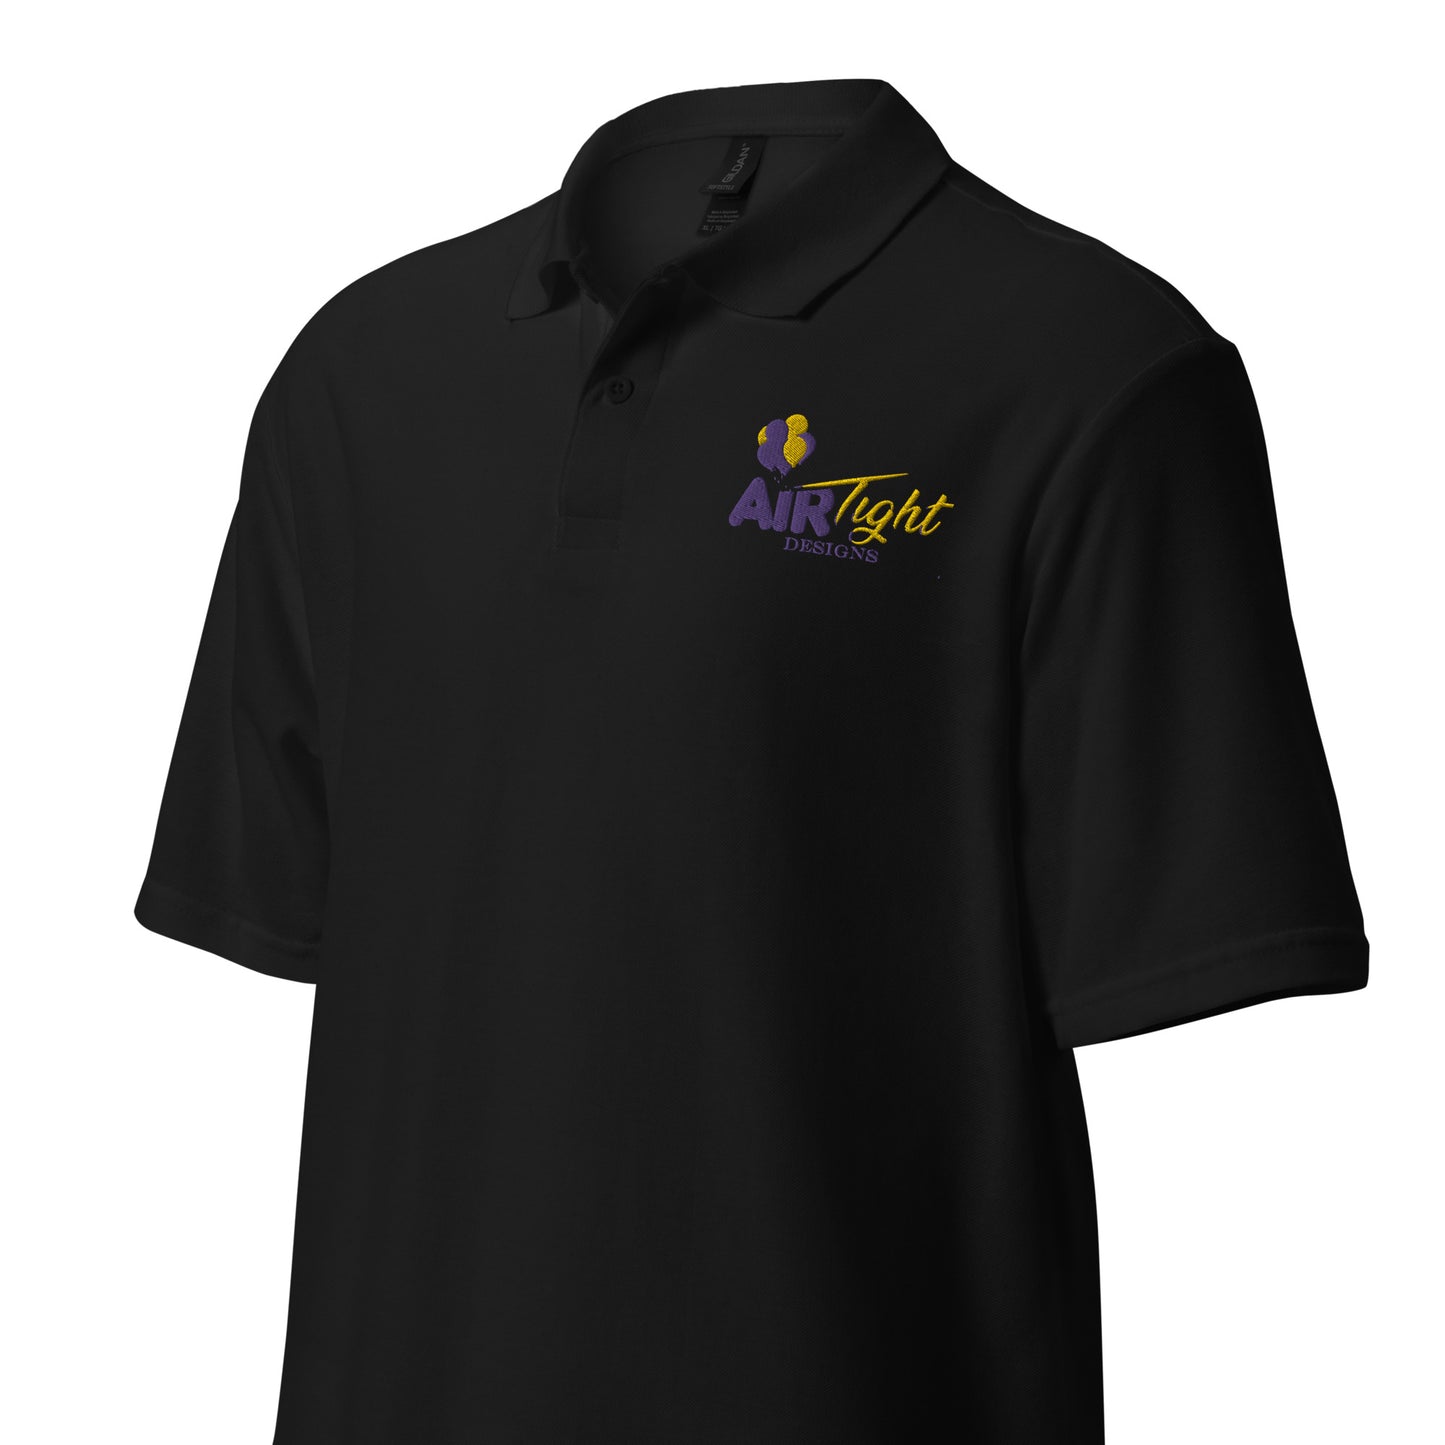 Air Tight Designs Embroidered Unisex pique polo shirt